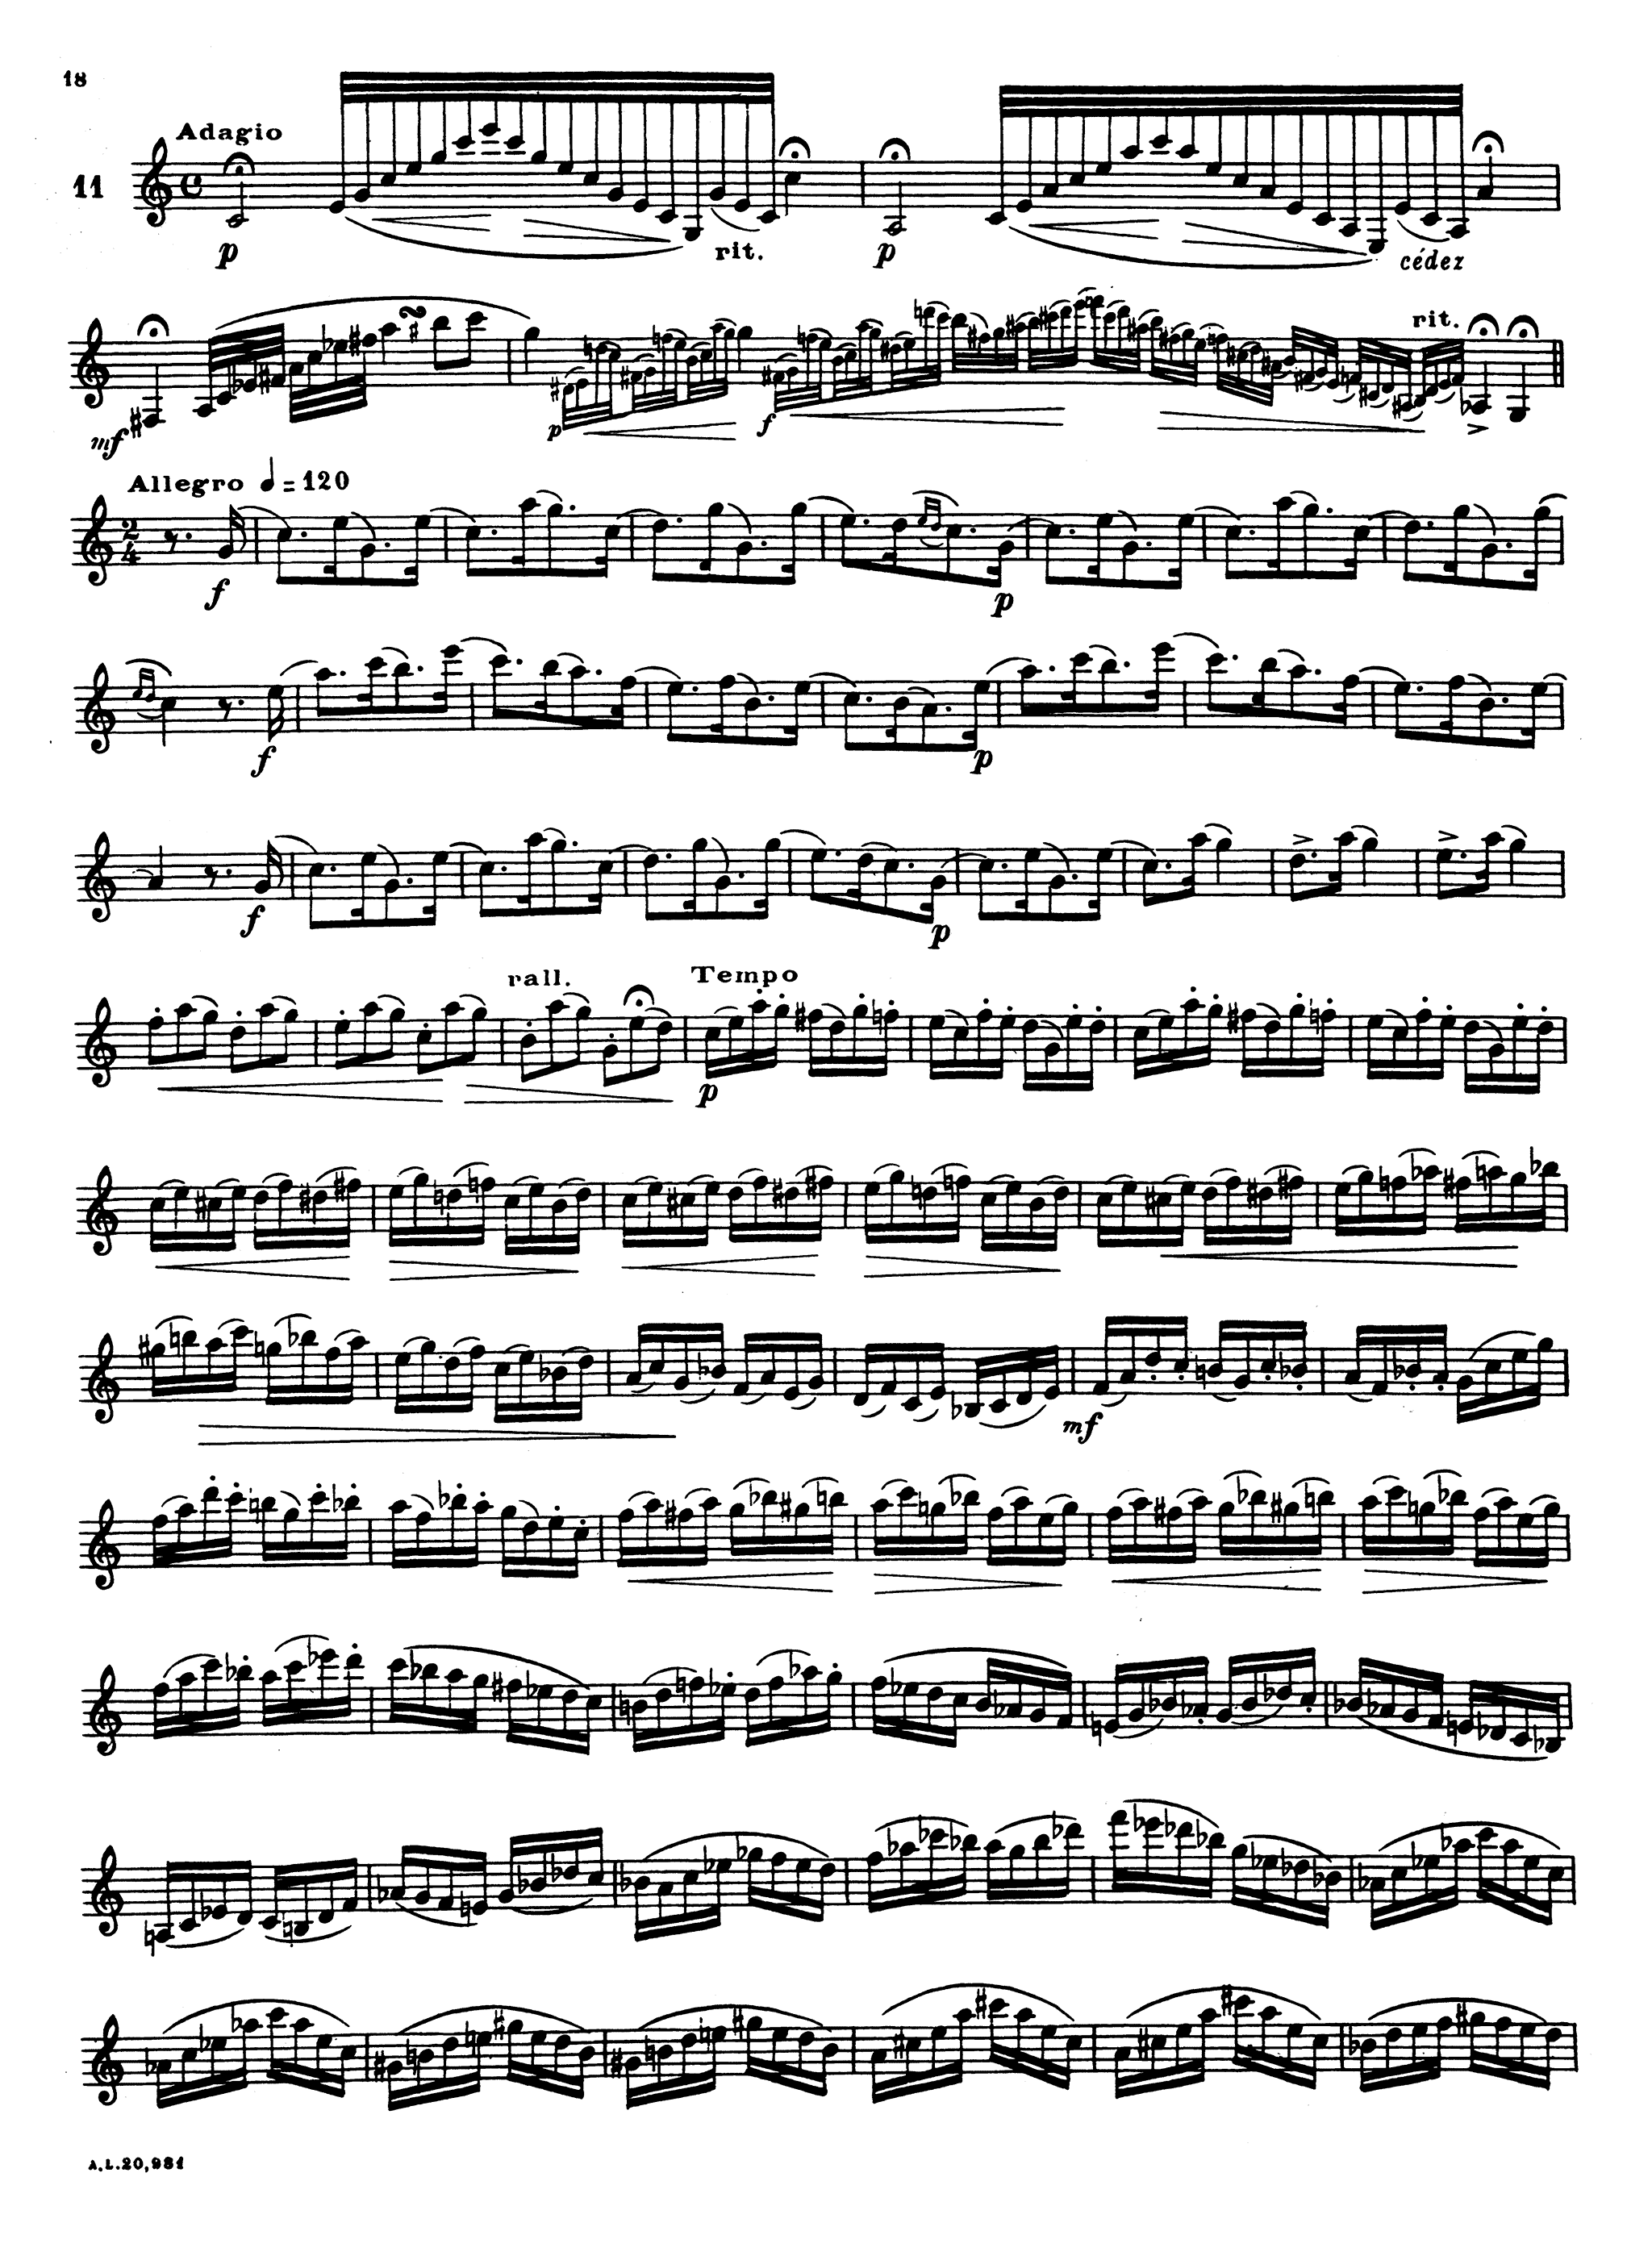 Cavallini 30 Clarinet Caprices, Book 1 of 2 Page 18